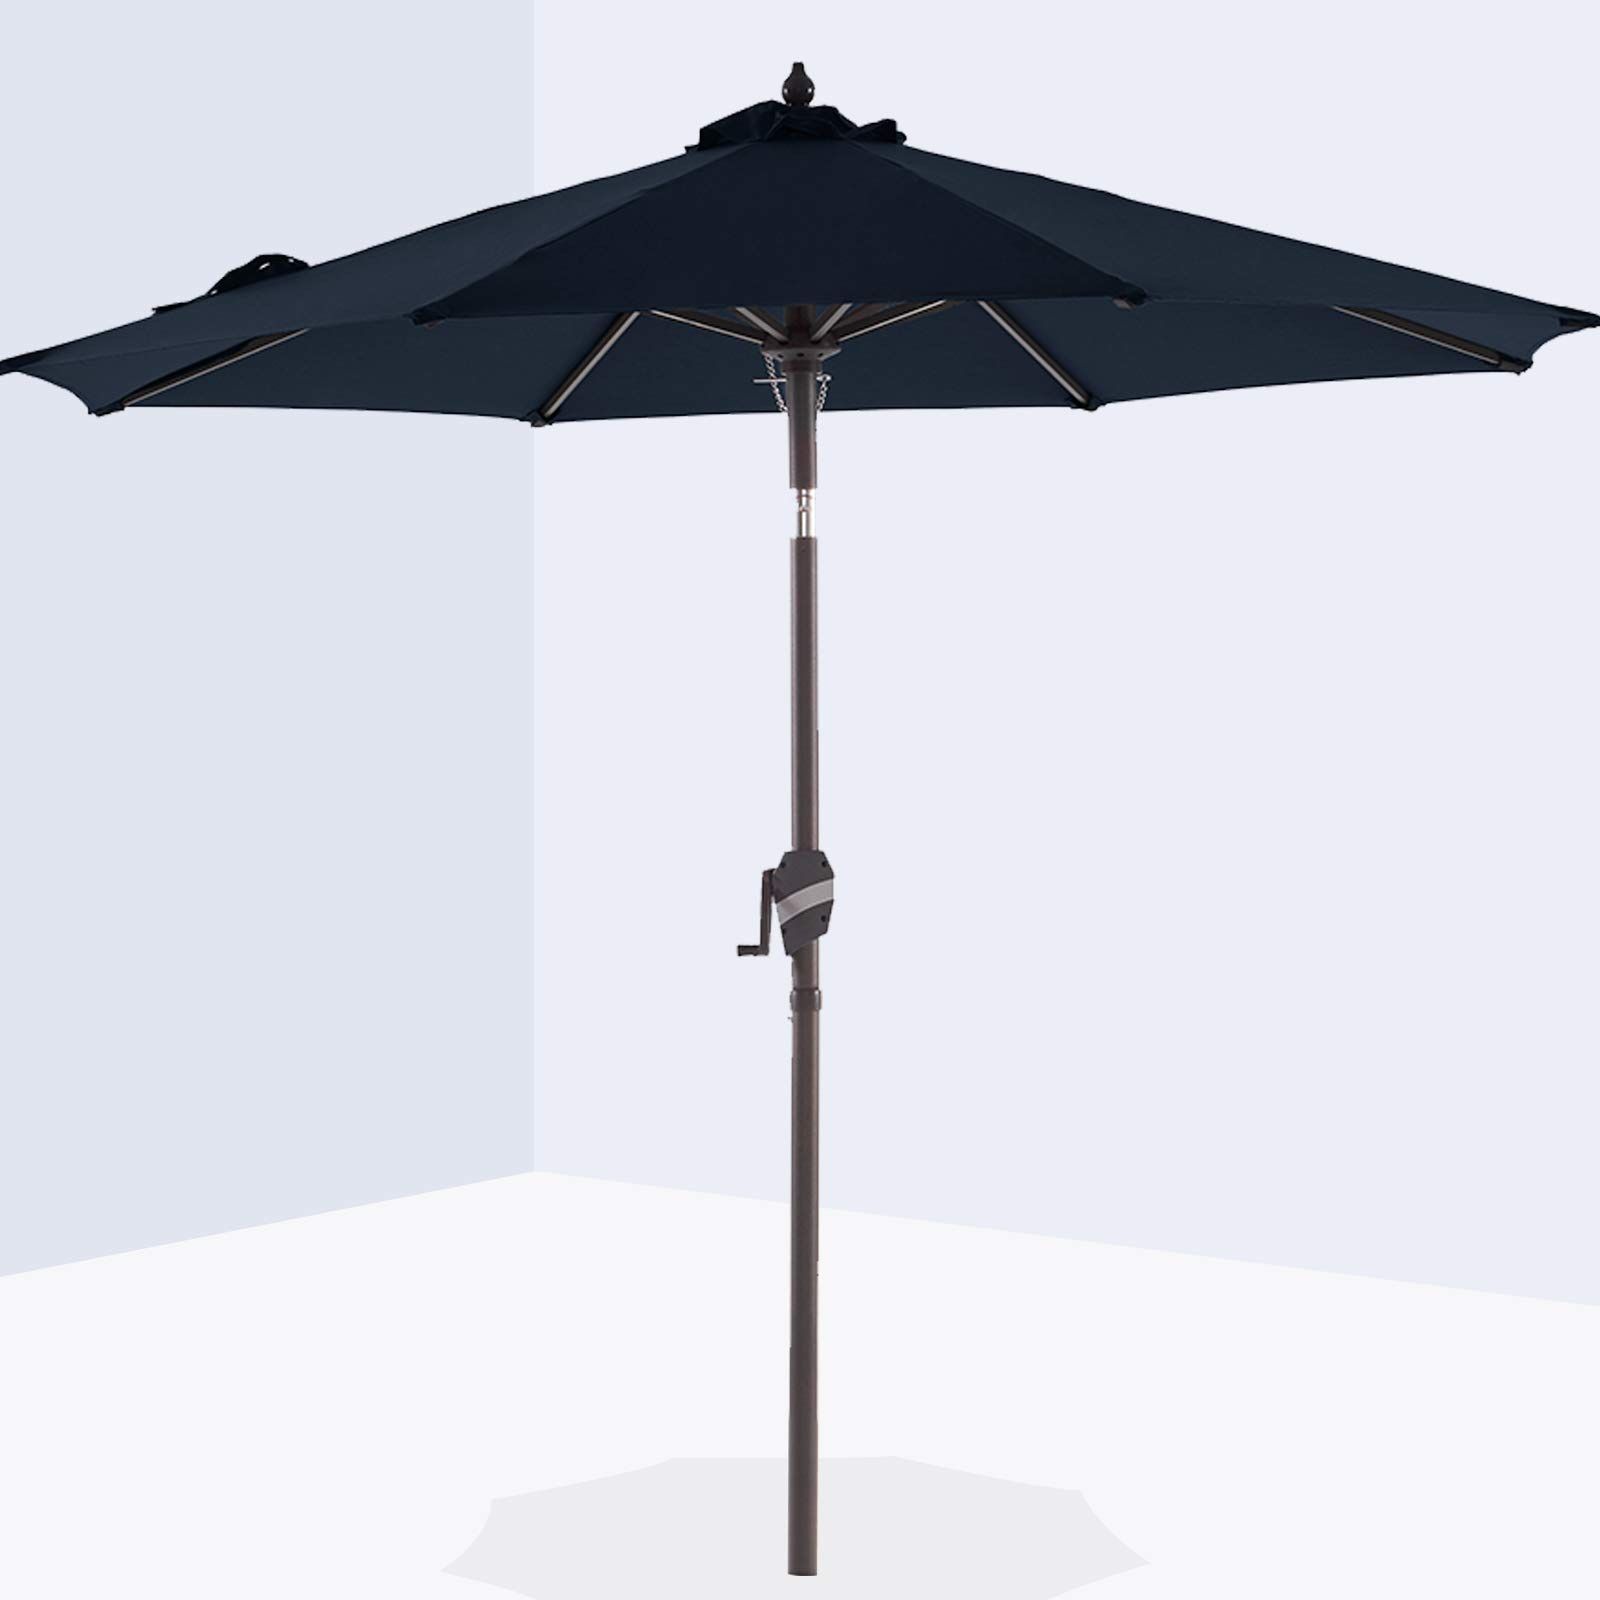 VINEY 9FT Sunbrella Umbrella Market Table Sun Umbrella Aluminum Patio Umbrella with 5-Year Non-Fading Sunbrella Acrylic Fabric Canopy Top, Navy Blue 